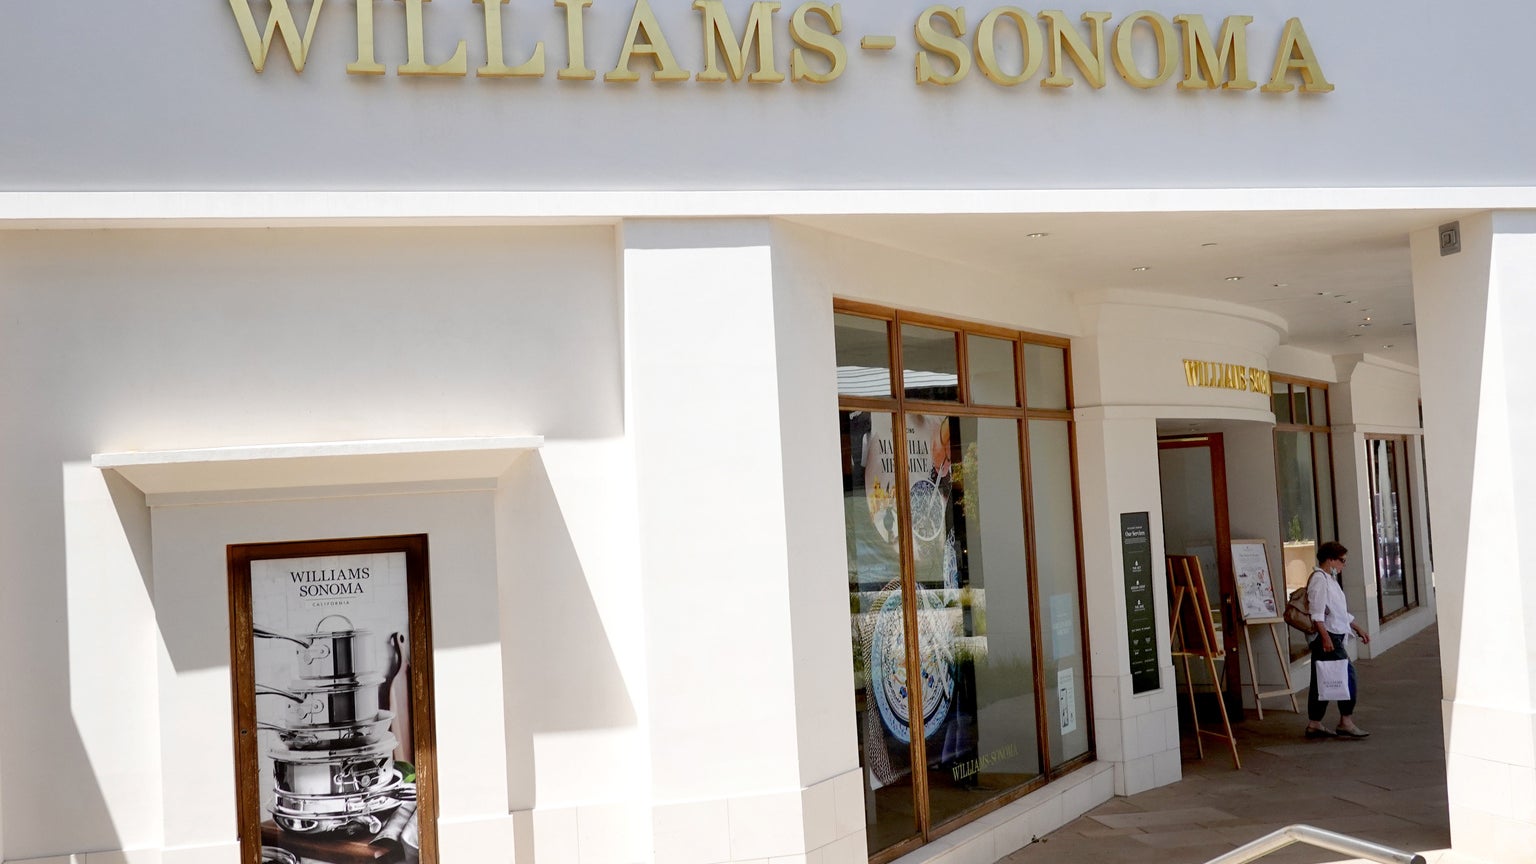 Williams-Sonoma stock rises, Leonard Green increases stake in company